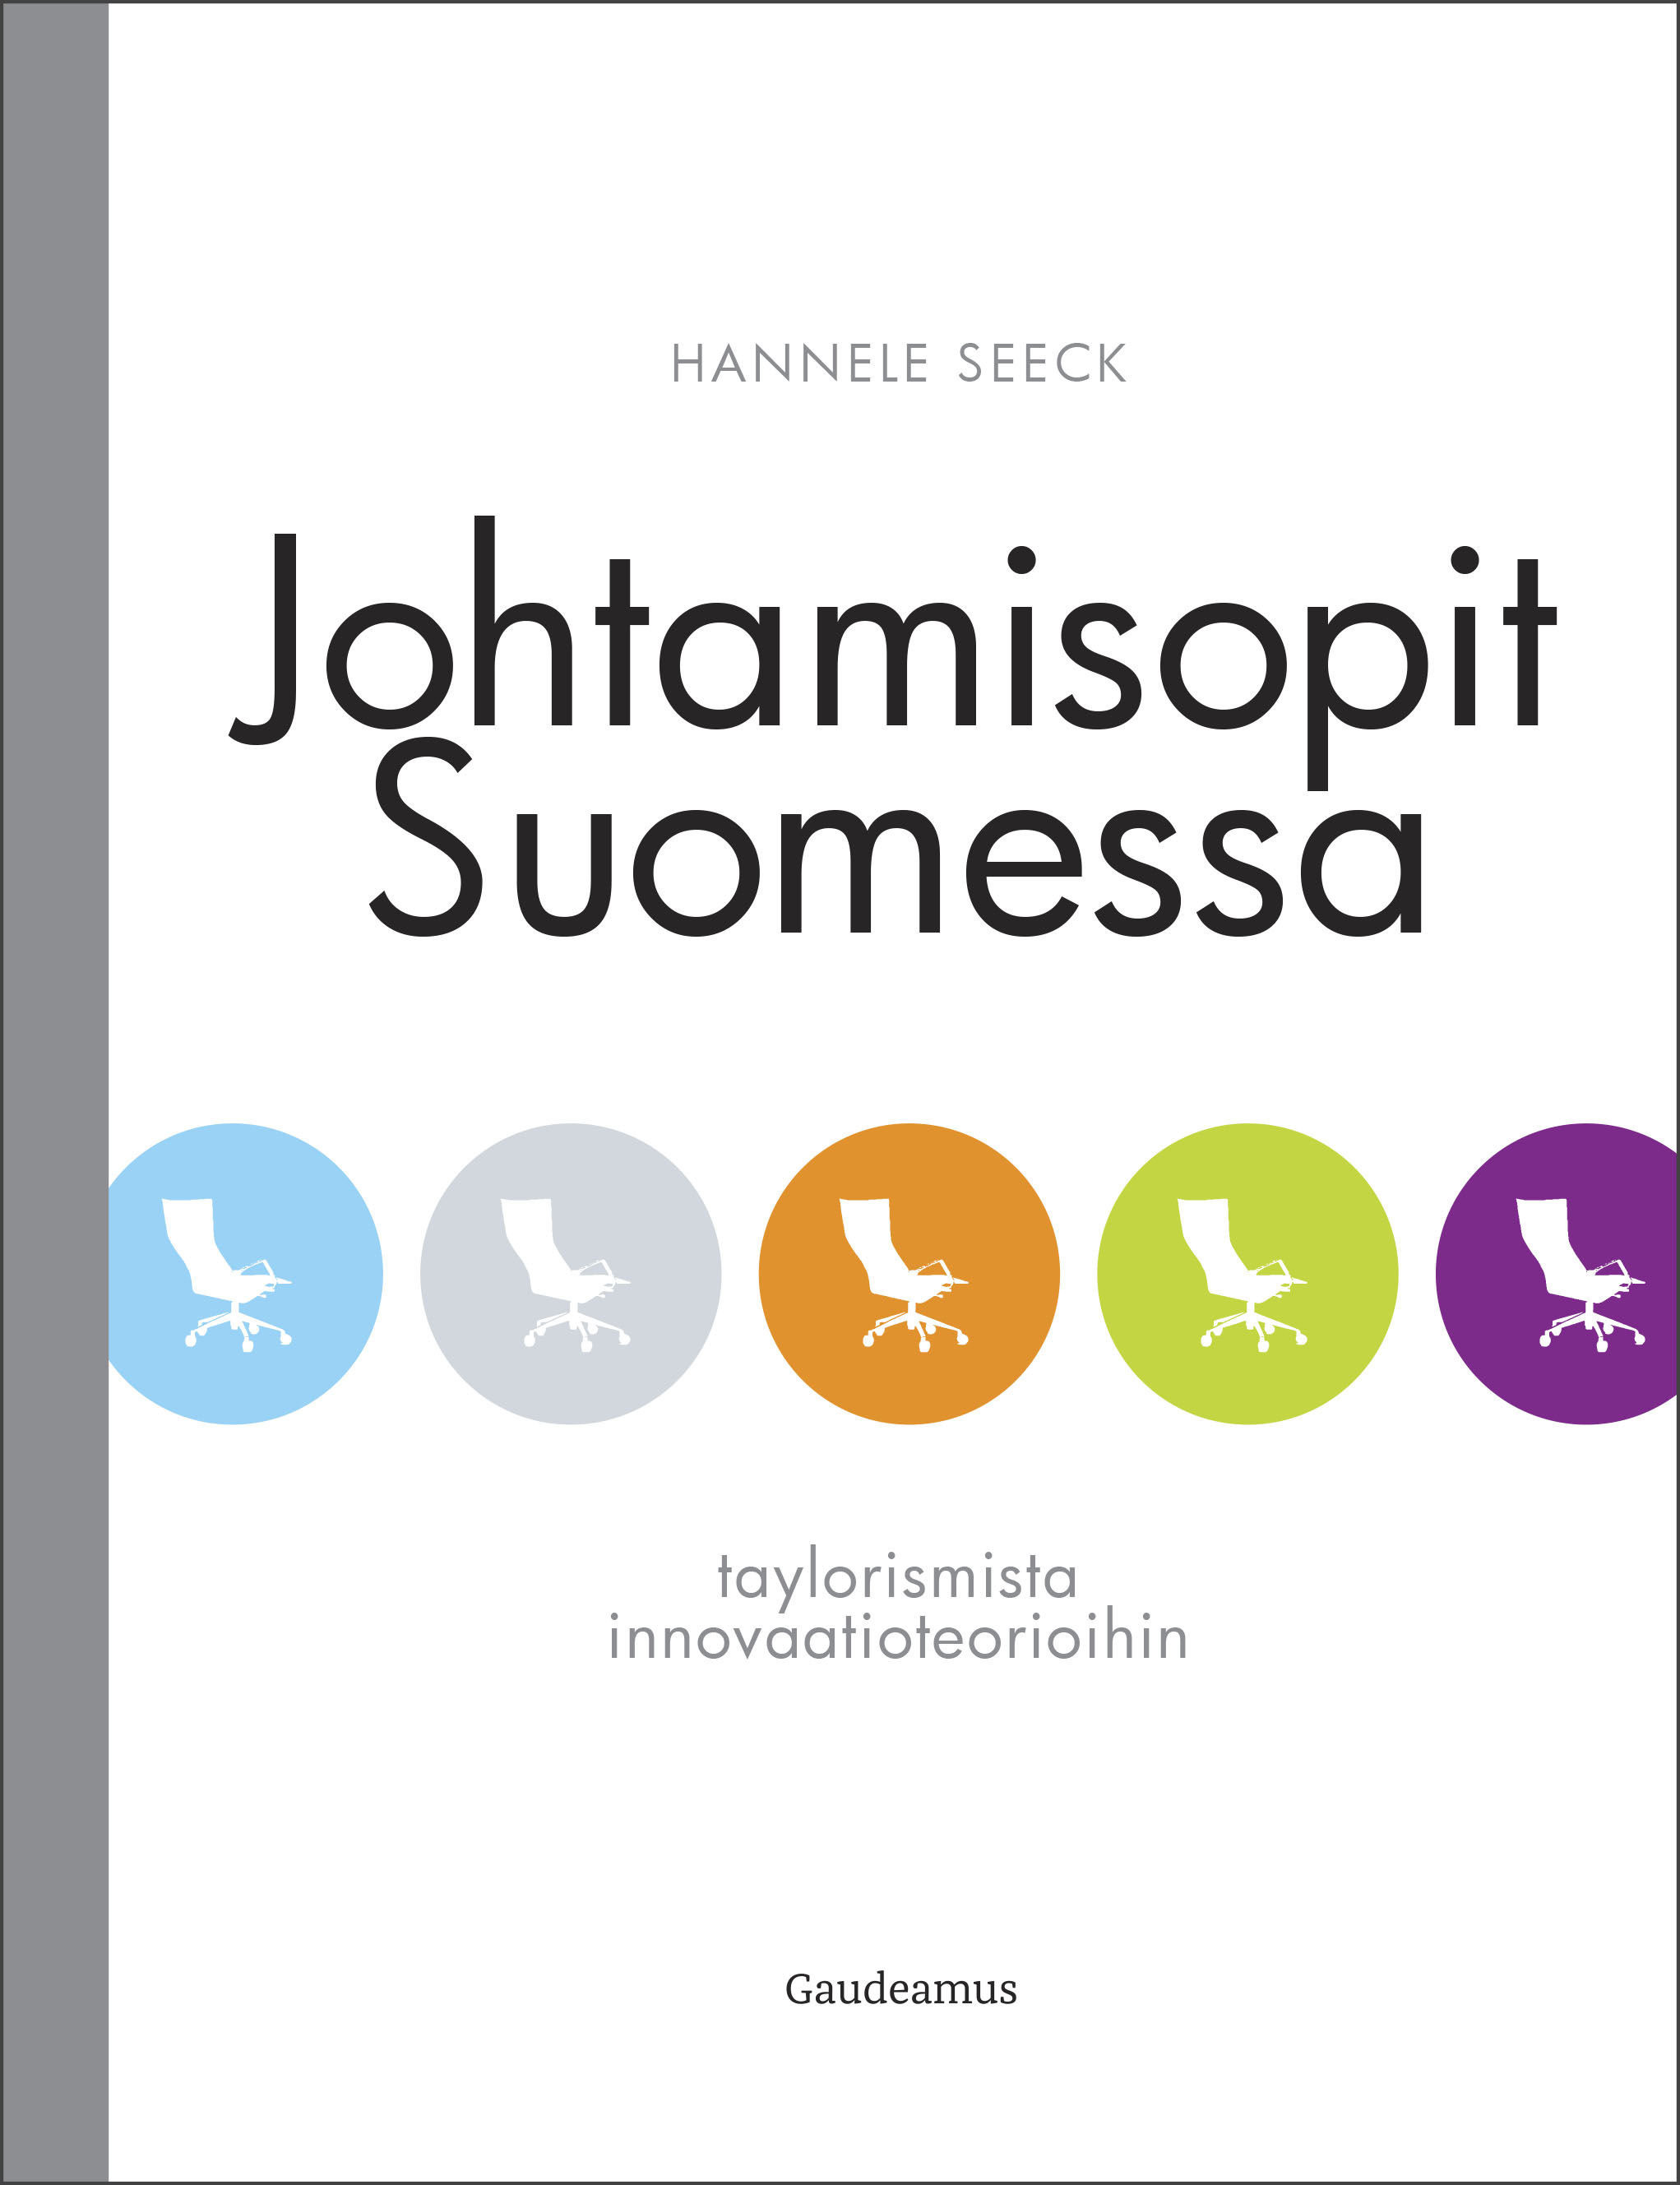 Hannele Seeck: Johtamisopit Suomessa (Hardcover, suomi language, Gaudeamus)